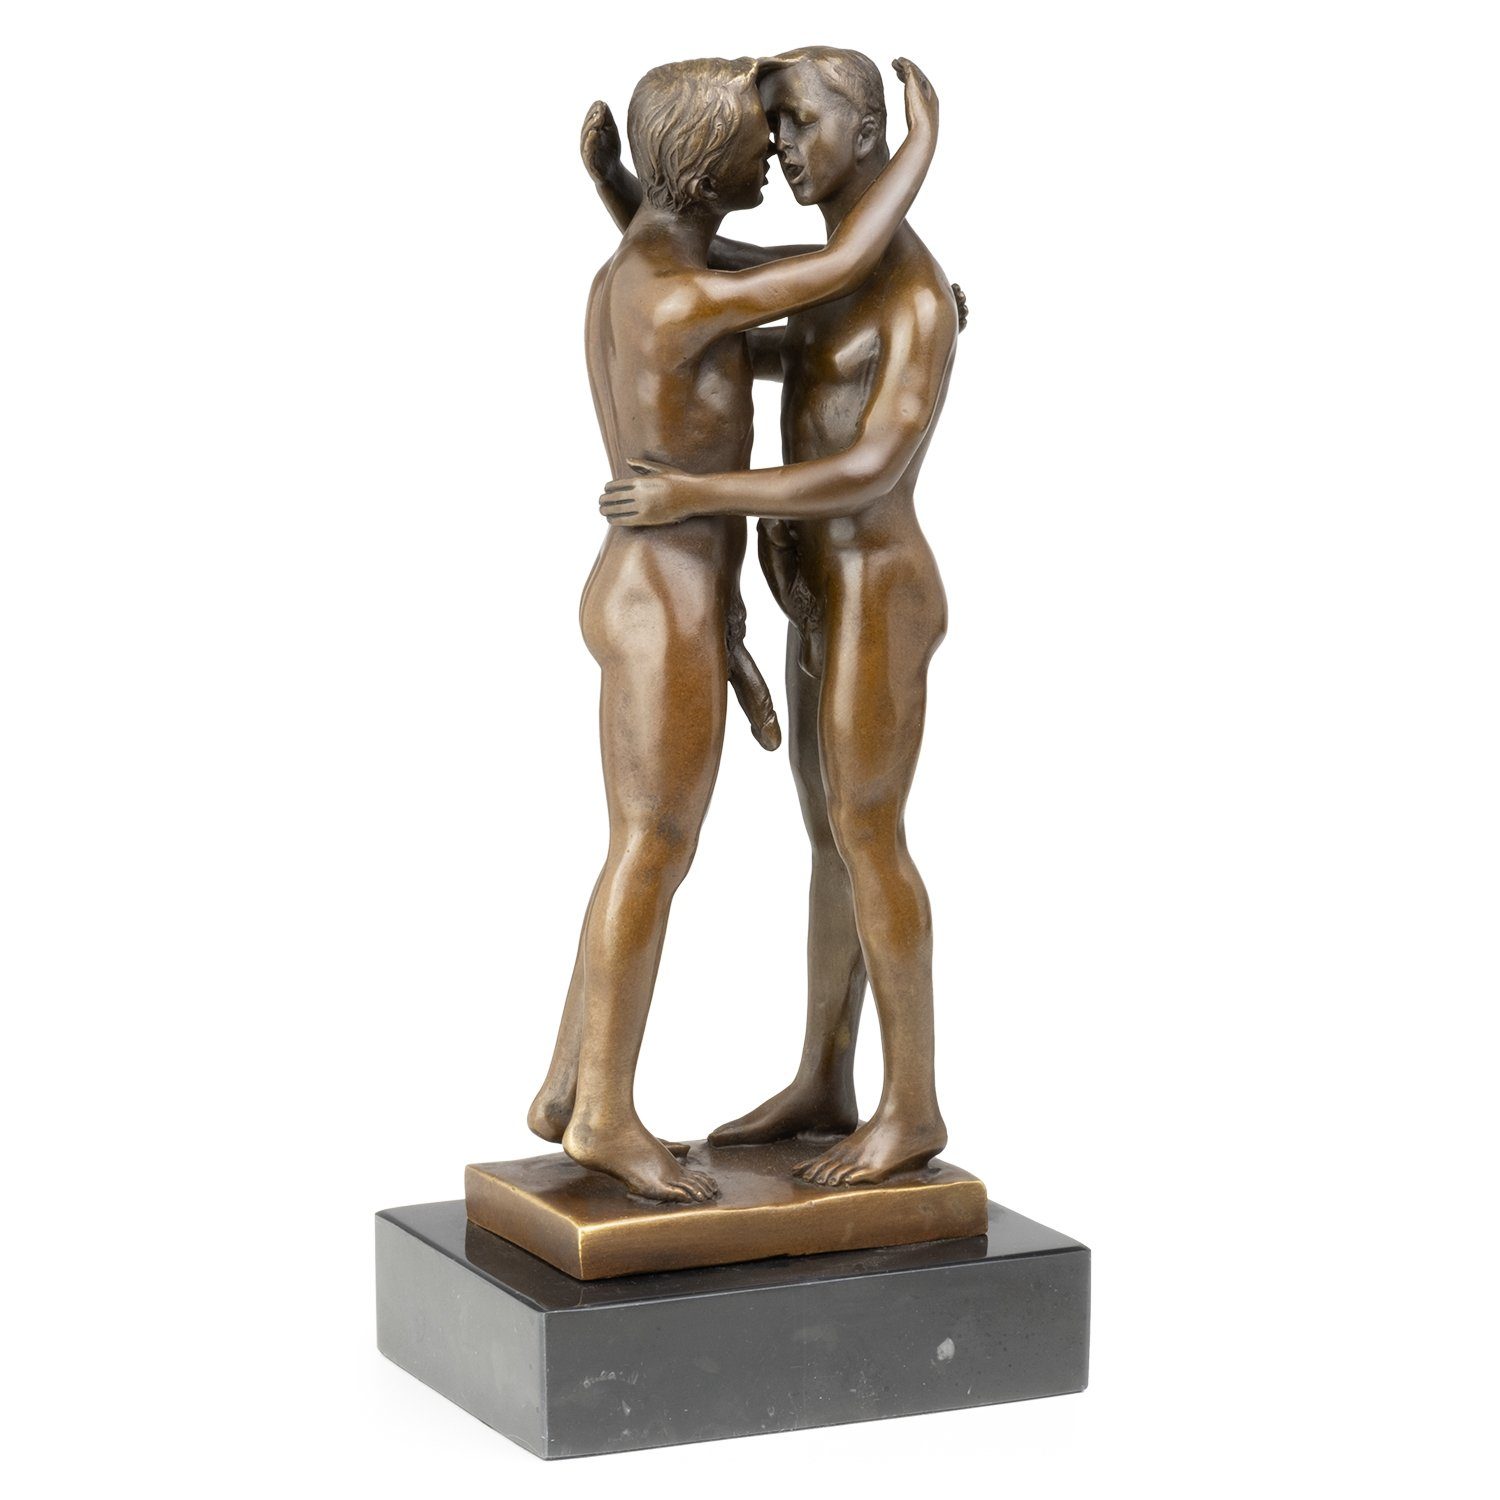 Moritz Skulptur Bronzefigur Skulpturen Statue Figuren Antik-Stil Paar Liebendes Männer